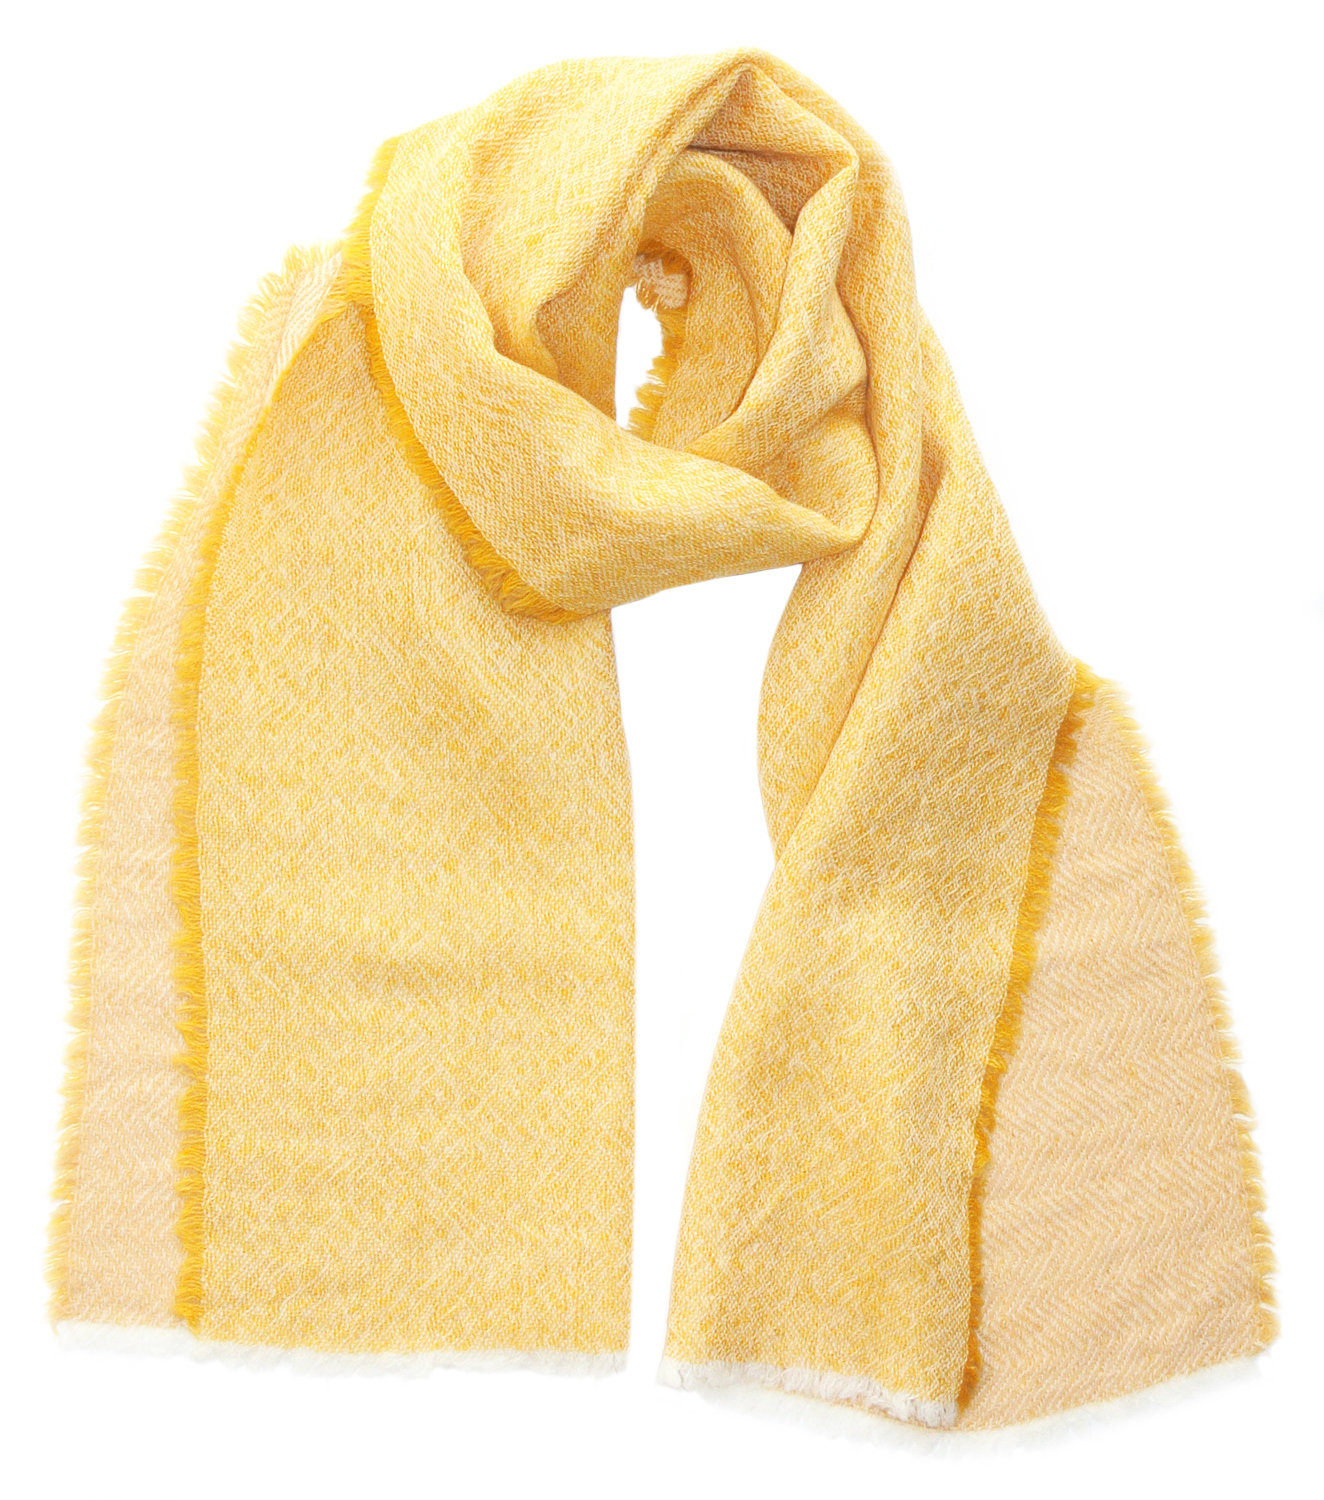 DUO scarf yellow - Kelpman Textile